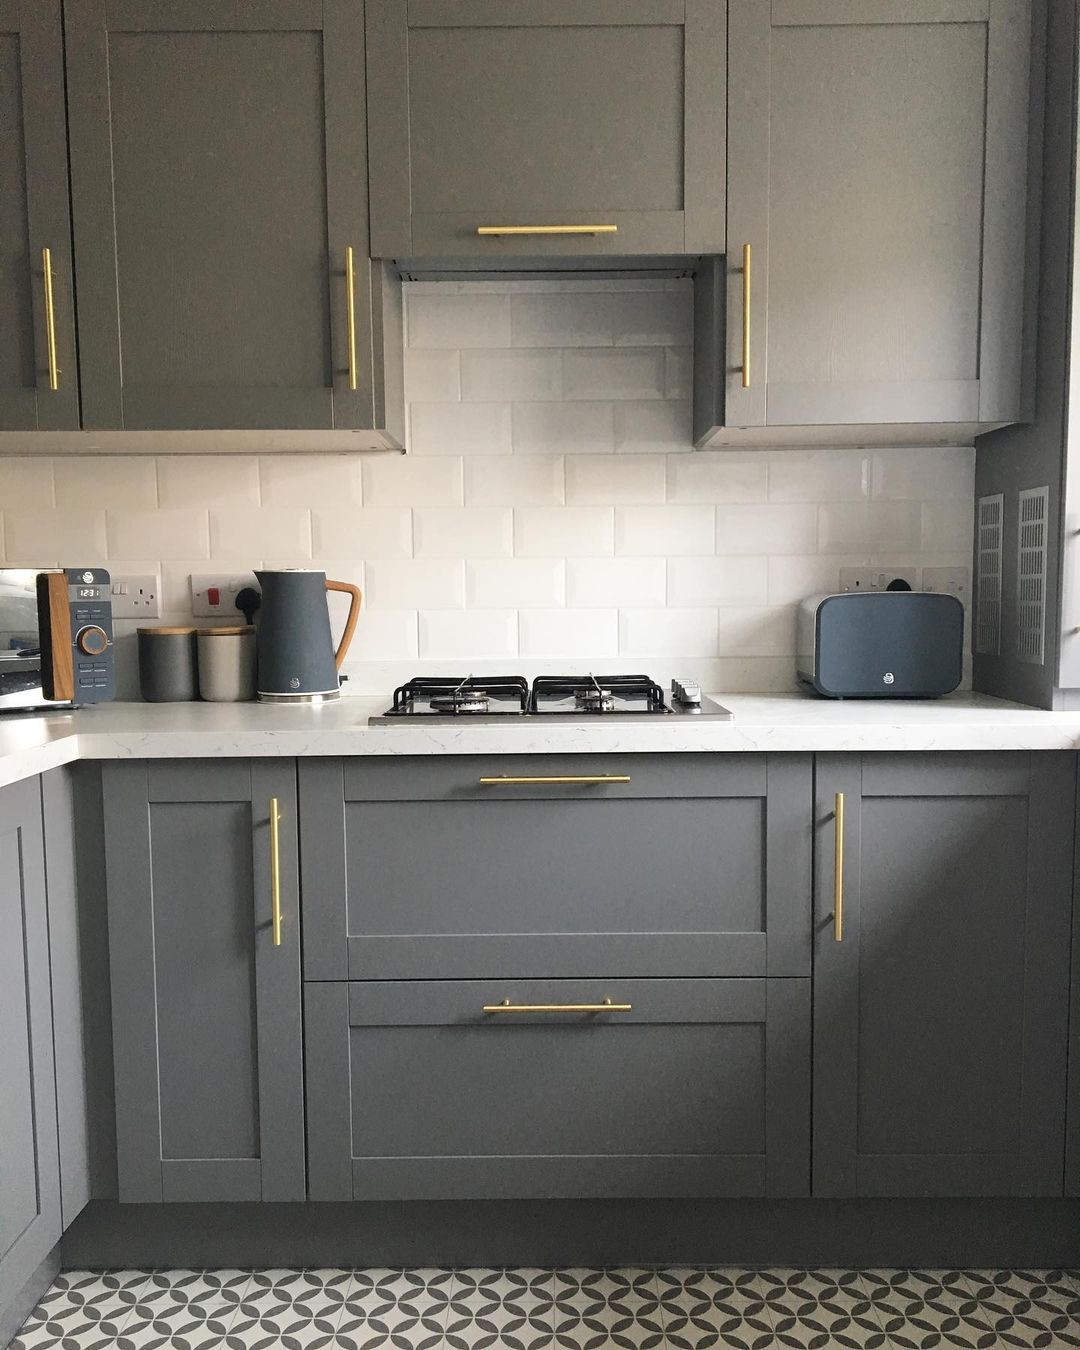 Monochrome Contrast Kitchen Design